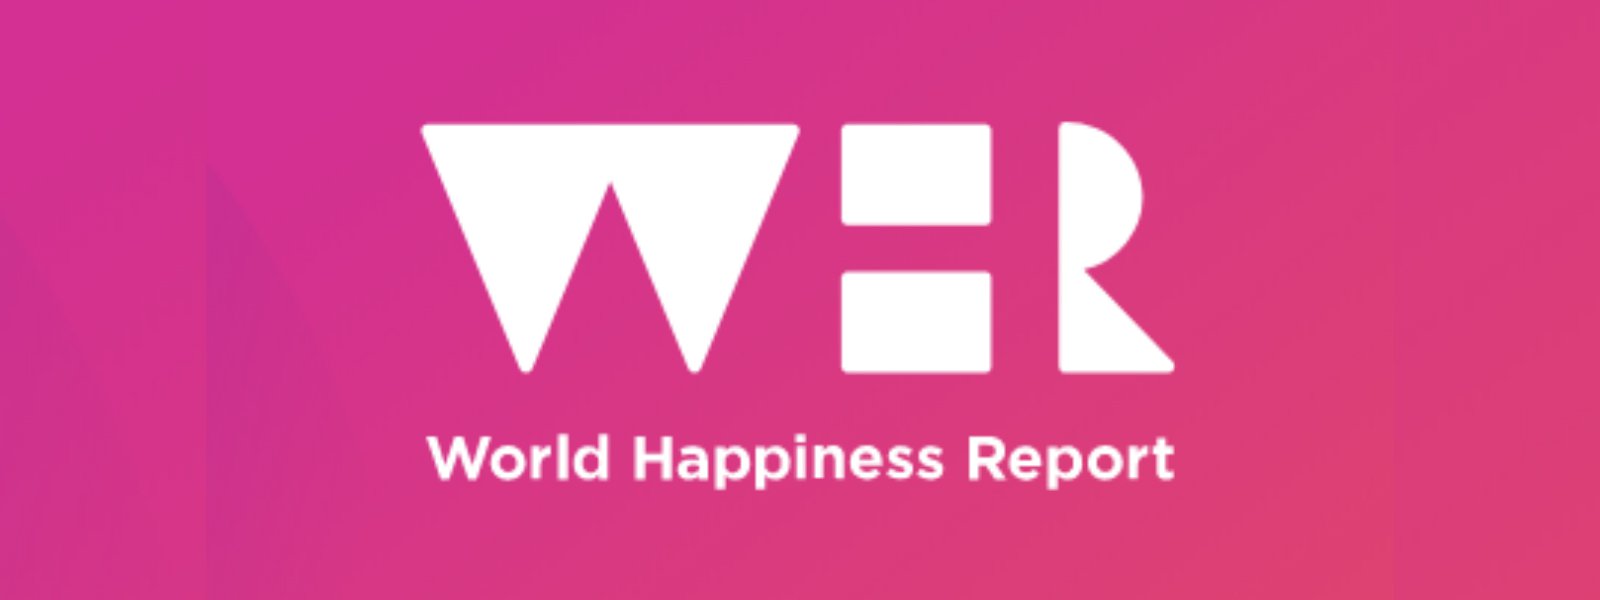 World Happiness Report South Sudan and Sudan